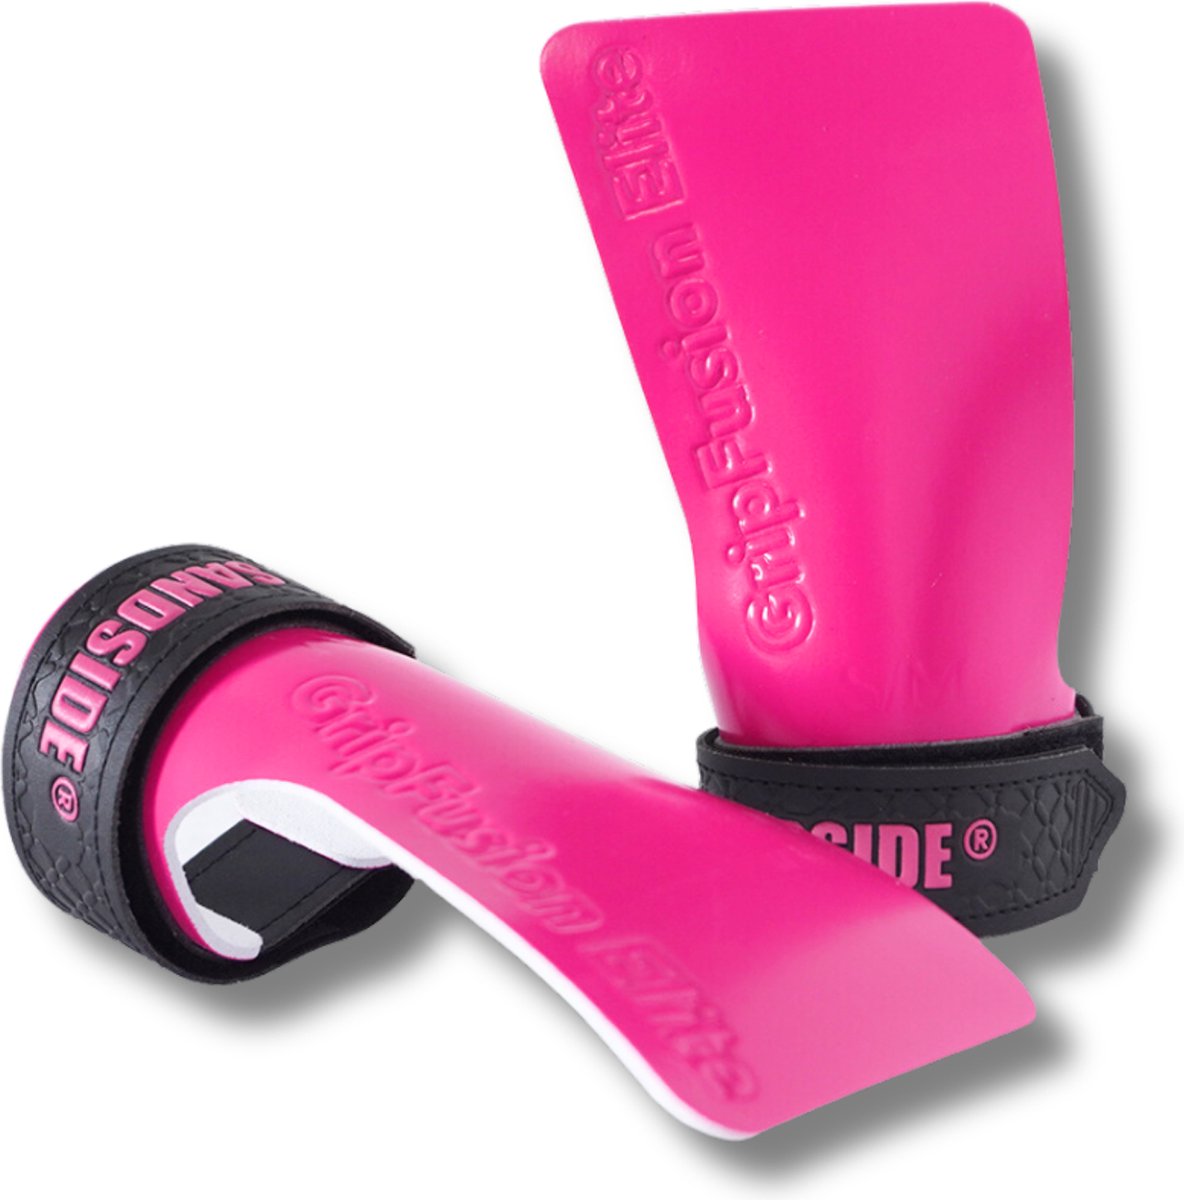 Sandside - CrossFit Grips Elite 2.0 - Sticky Hand Grips - No Chalk - Fitness Handschoenen - Fingerless Grips - Hot Pink L/XL